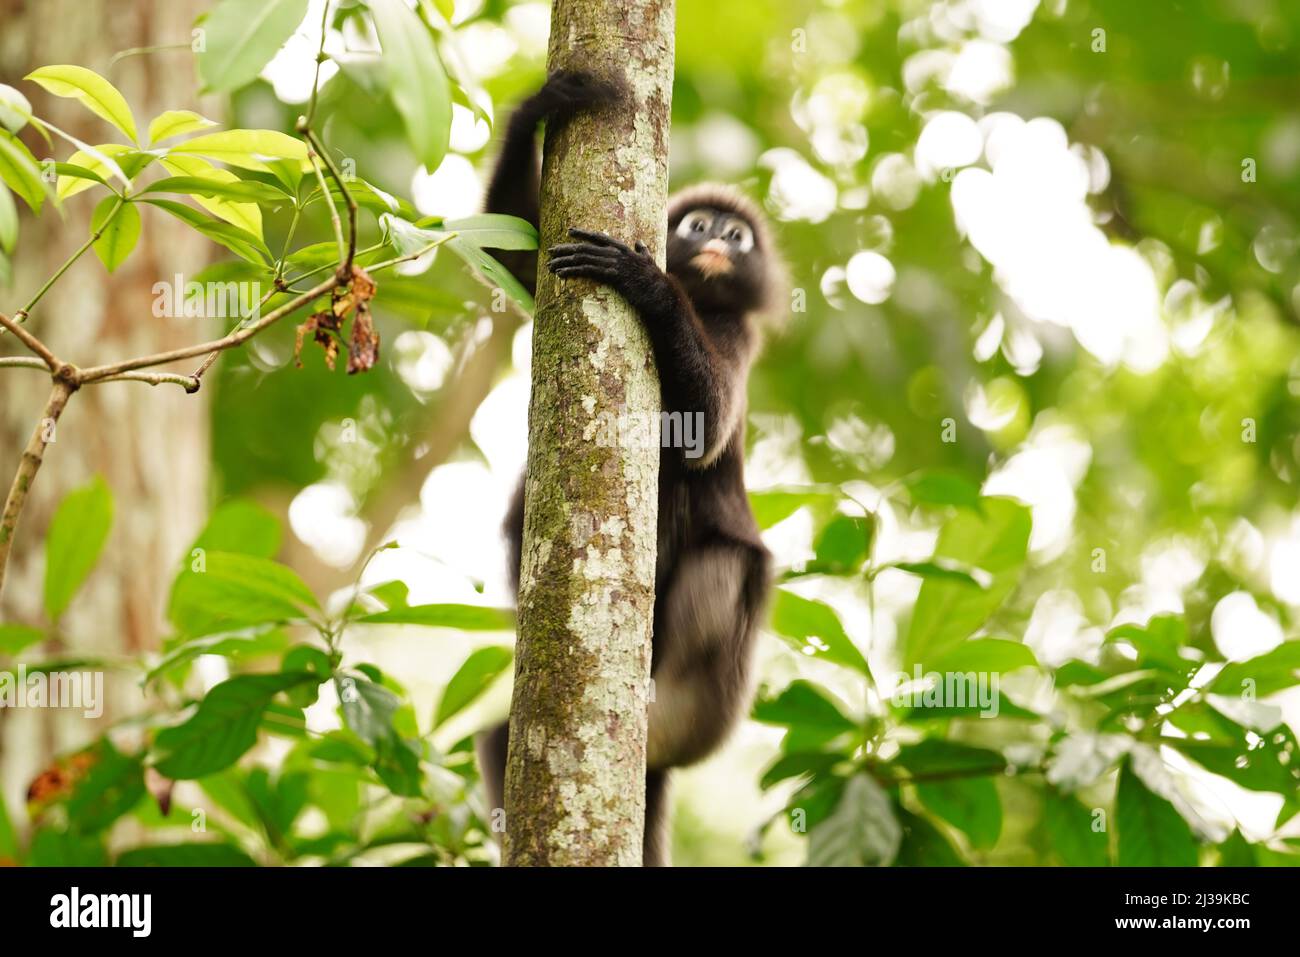 Dusky leaf monkey in rainforest in Langkawi, Malaysia Stock Photo